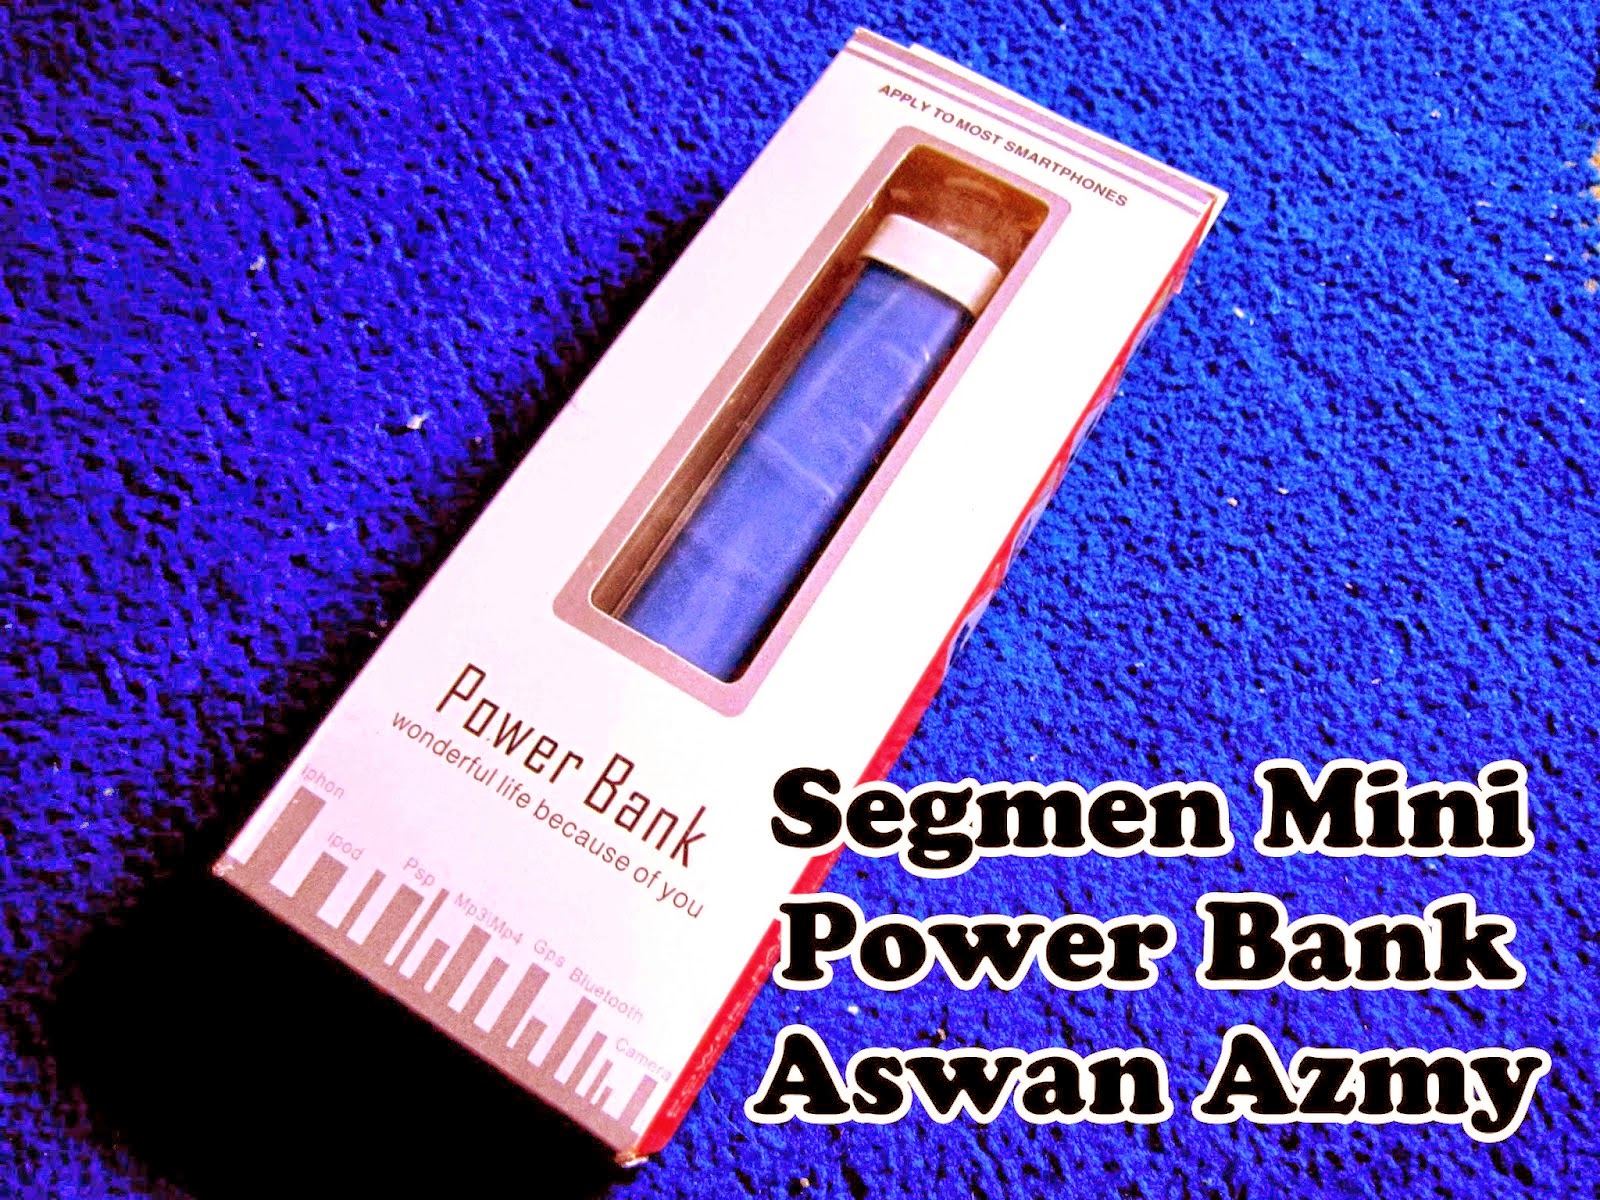 http://aswanazmy.blogspot.com/2014/04/segmen-mini-power-bank-aswan-azmy.html